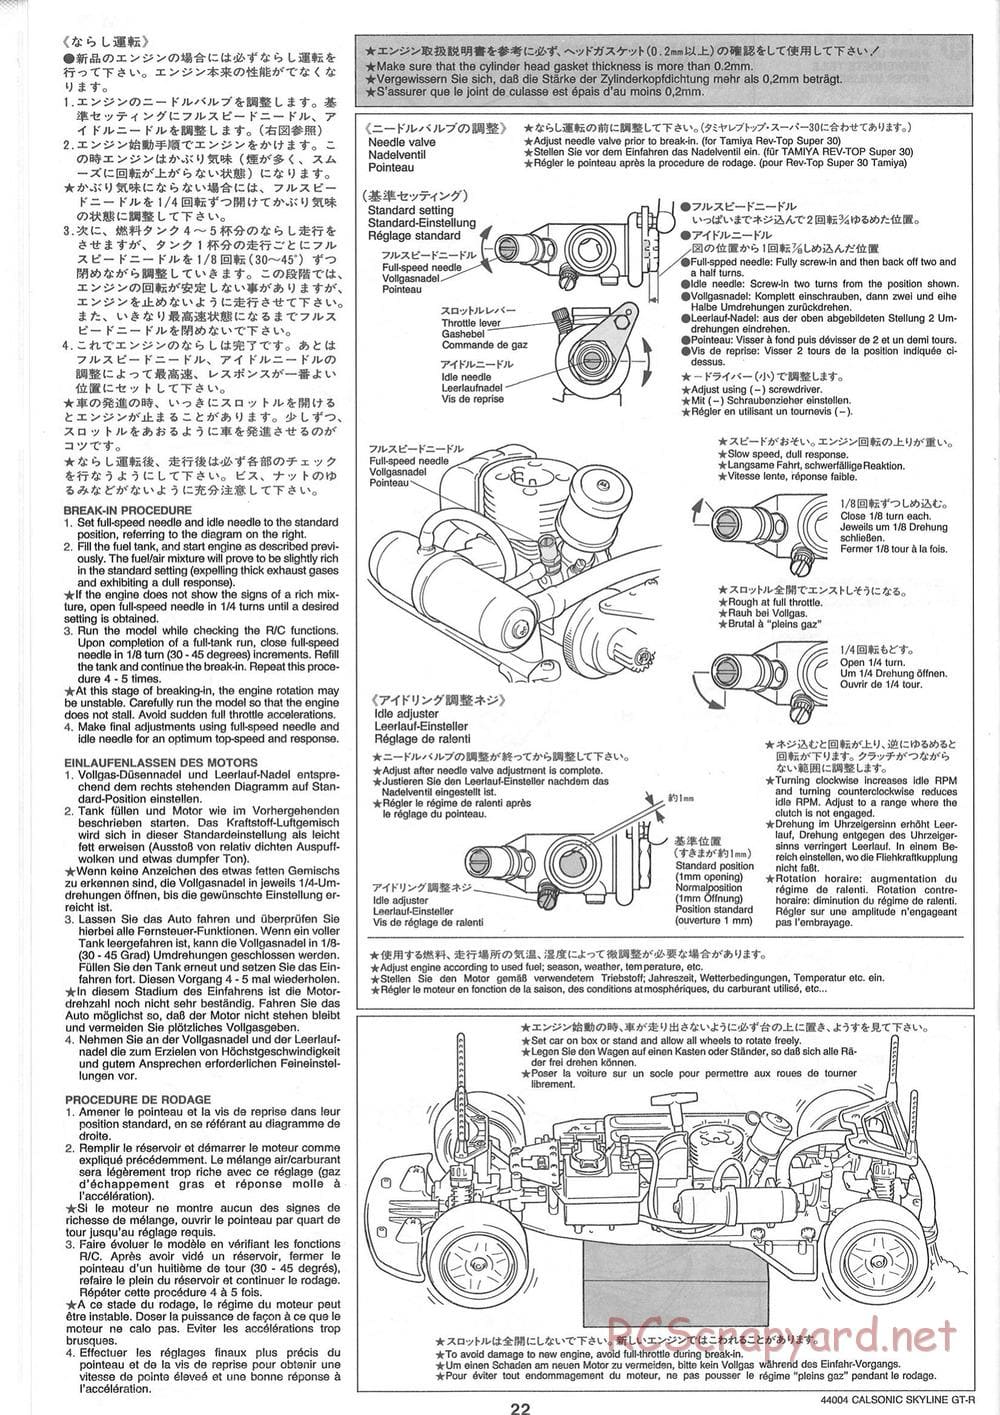 Tamiya - Calsonic GT-R - TGX Mk.1 Chassis - Manual - Page 22